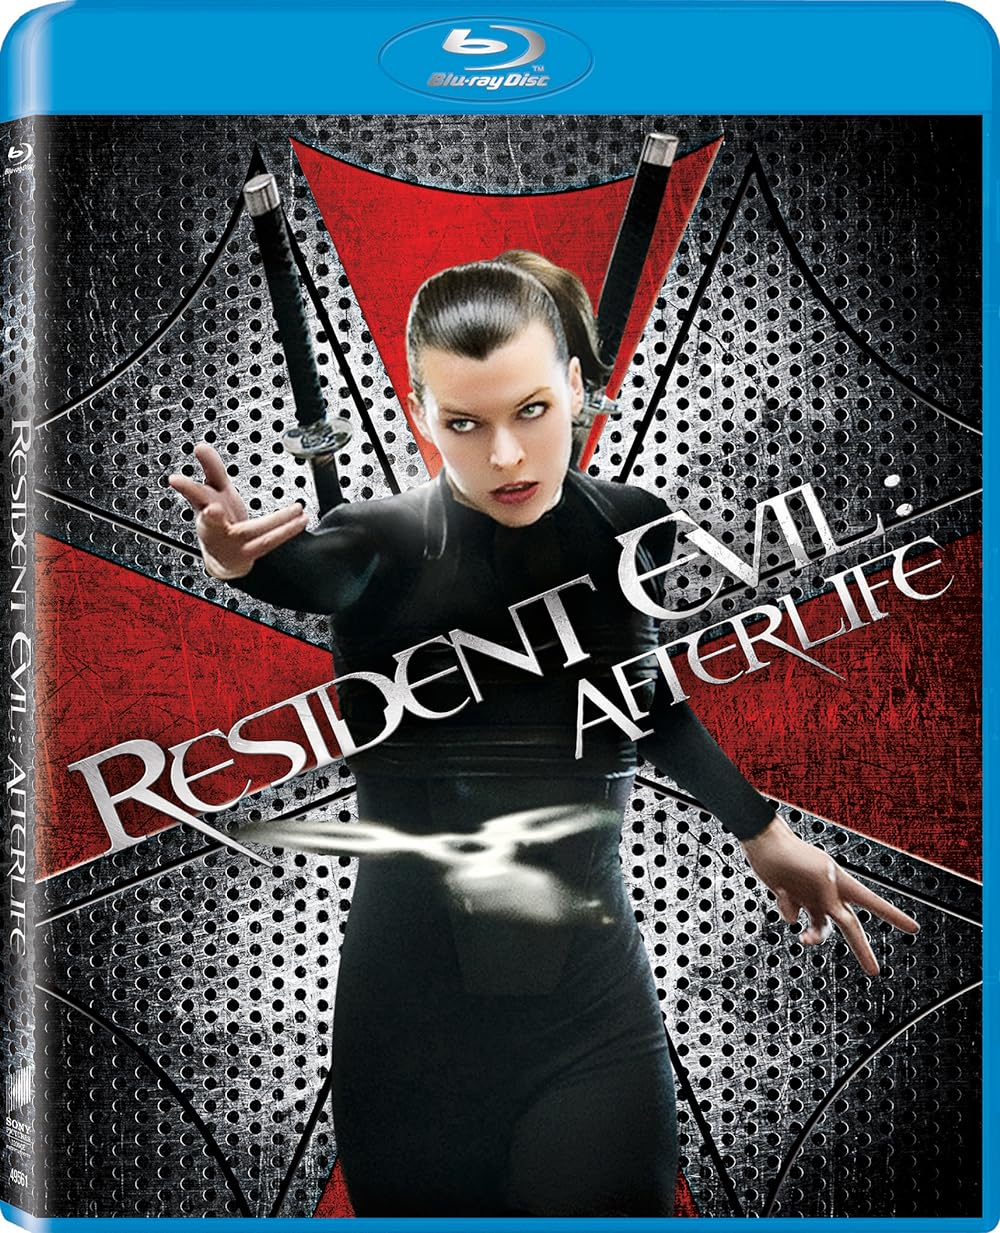 Resident Evil: Afterlife (2010) 2319Kbps 23.976Fps 48Khz BluRay DTS-HD MA 5.1Ch Turkish Audio TAC